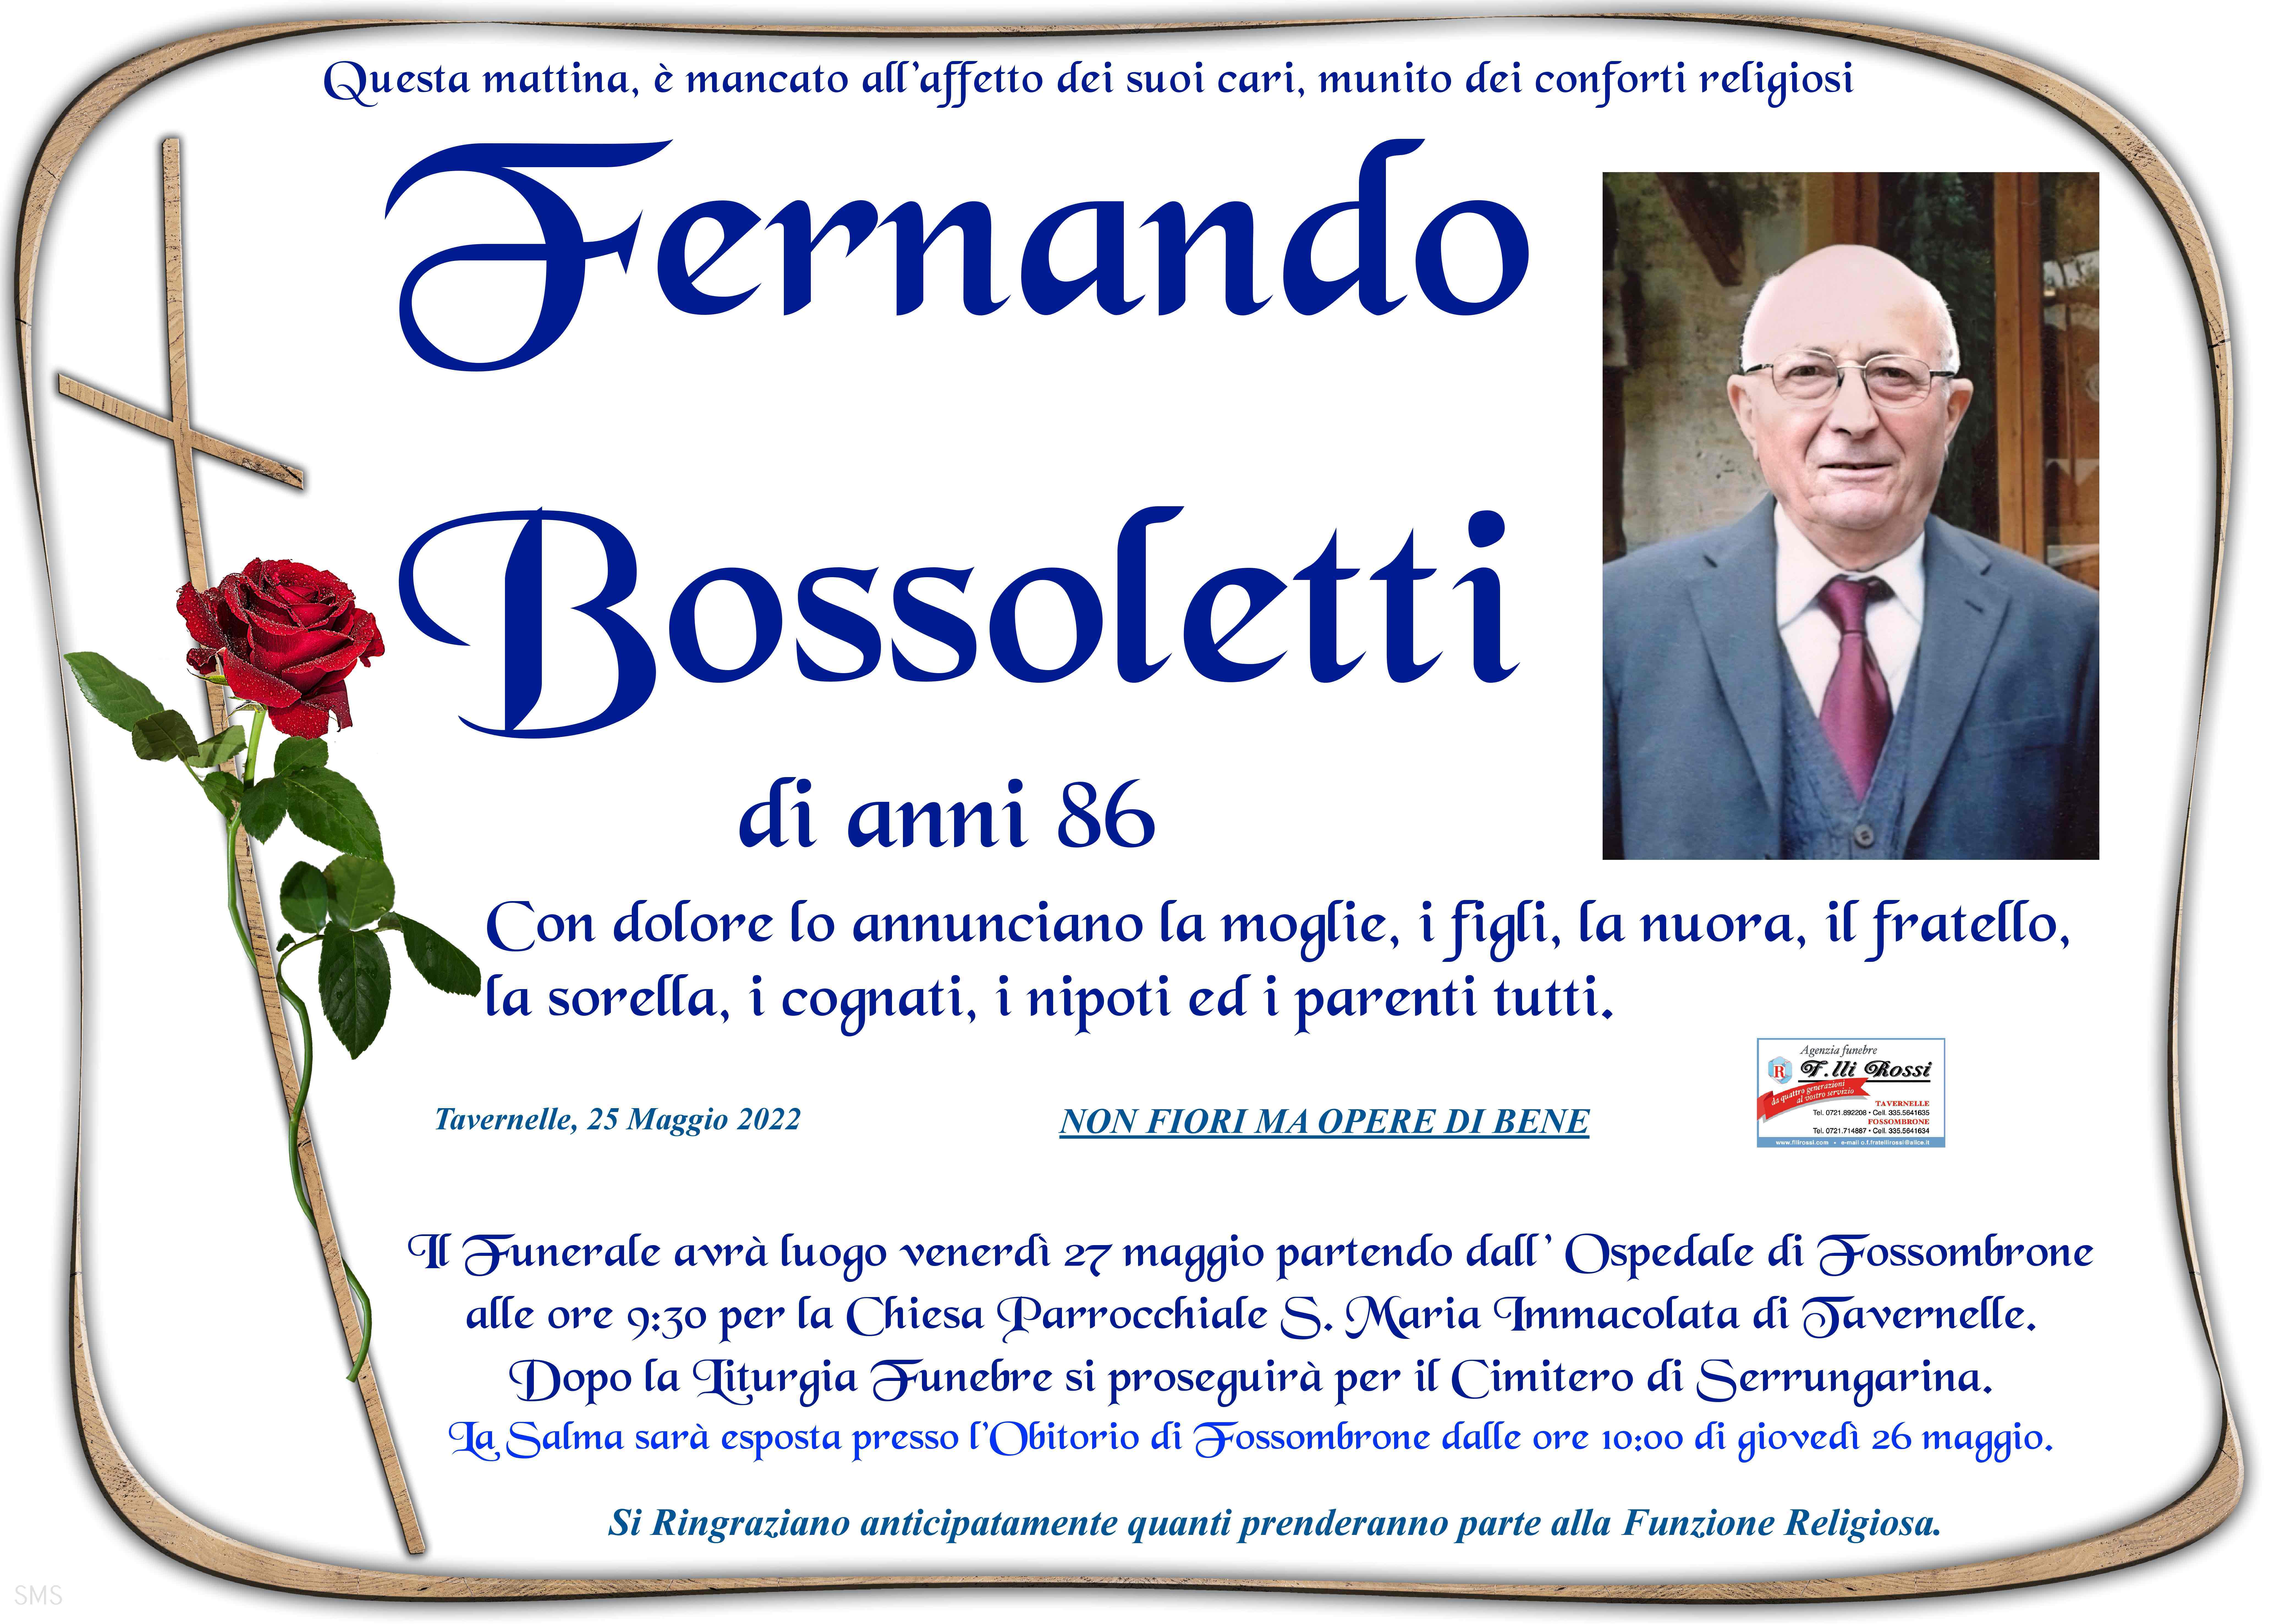 Fernando Bossoletti